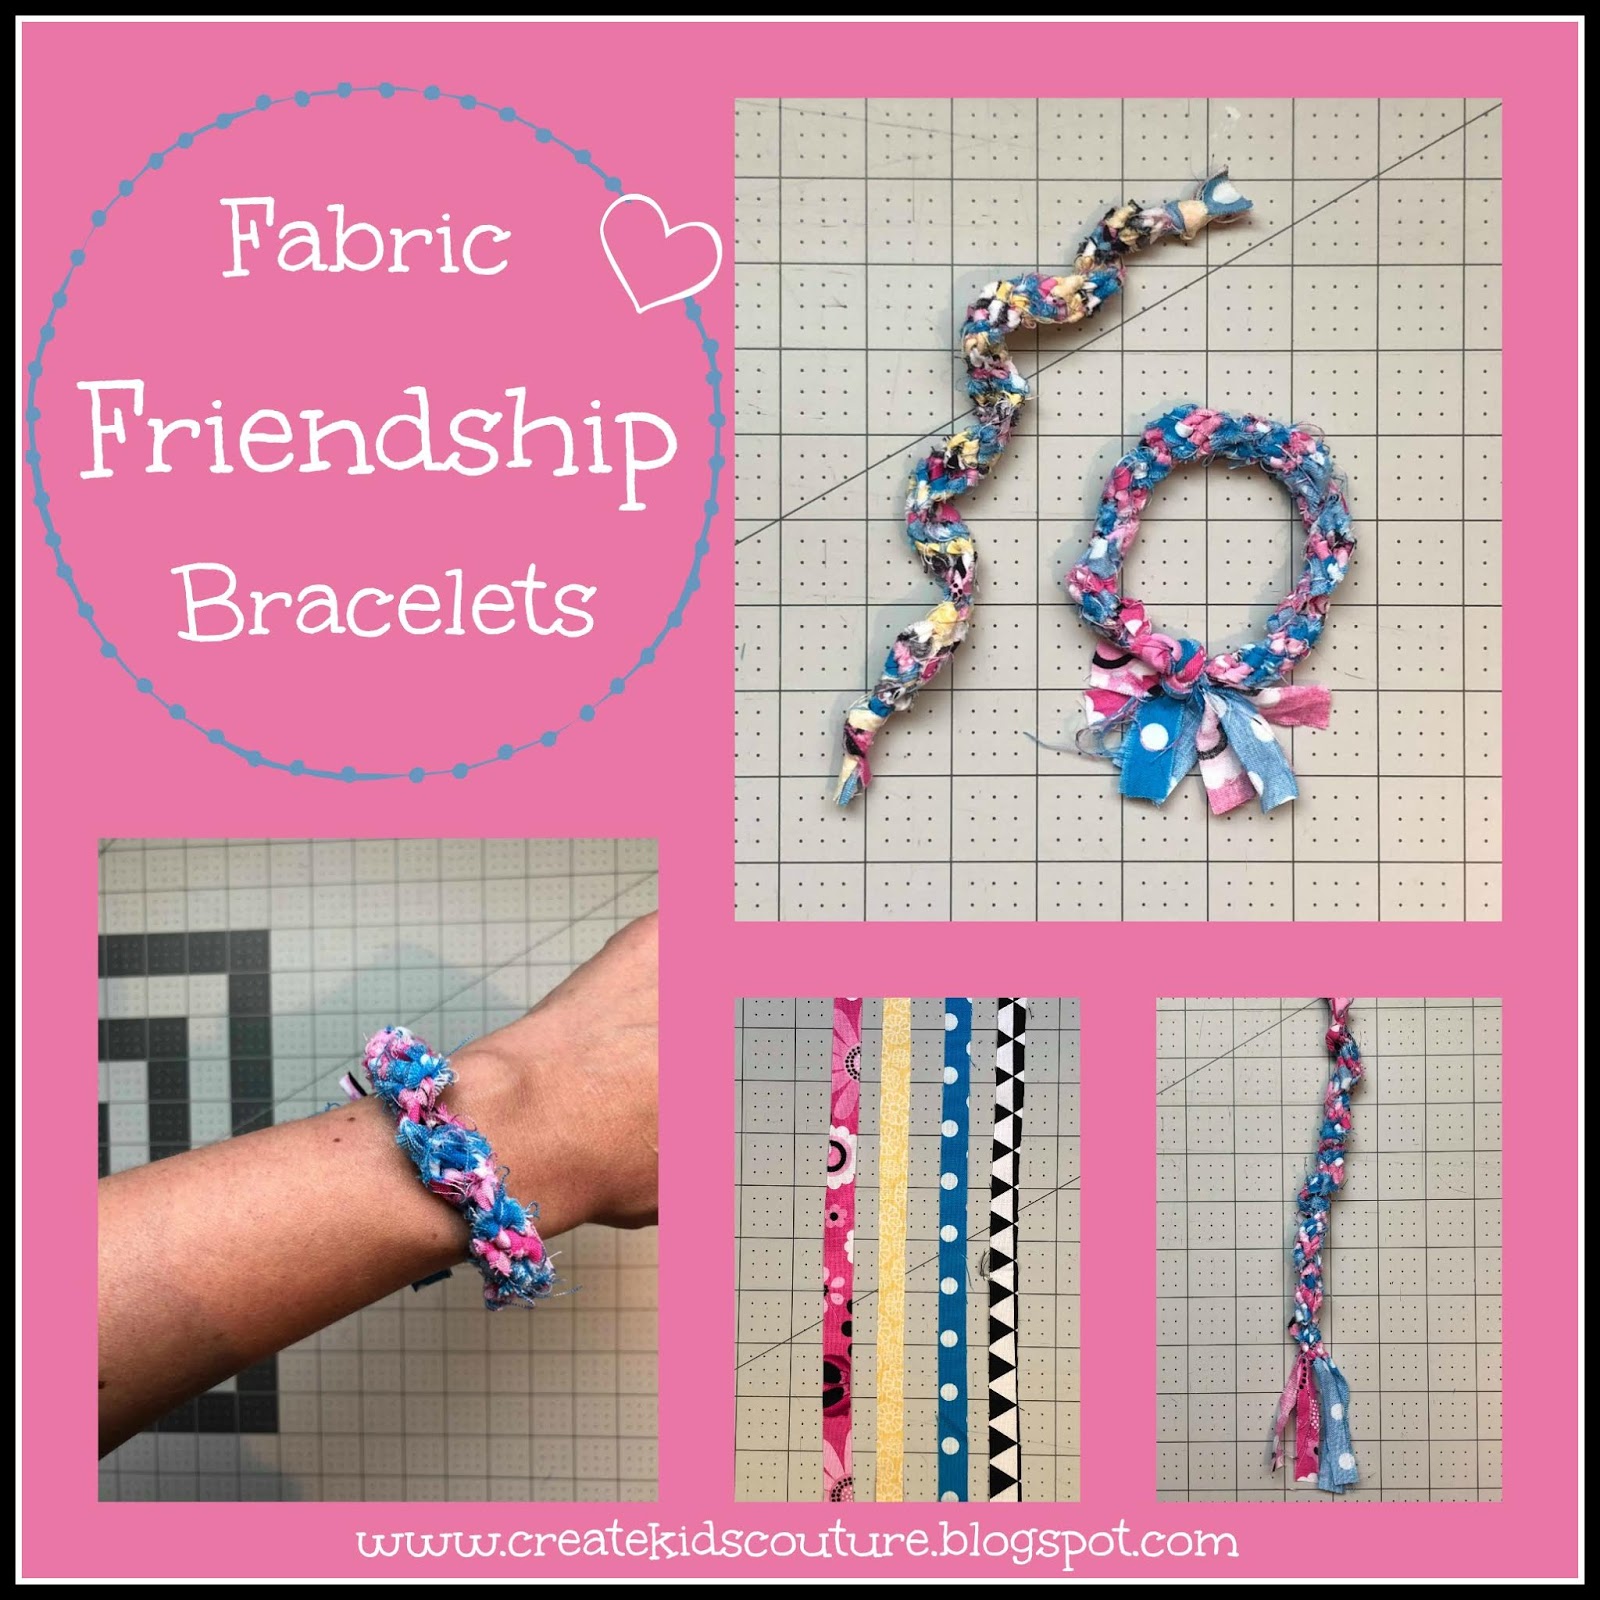 How to Make a Friendship Bracelet: Beginner Instructions